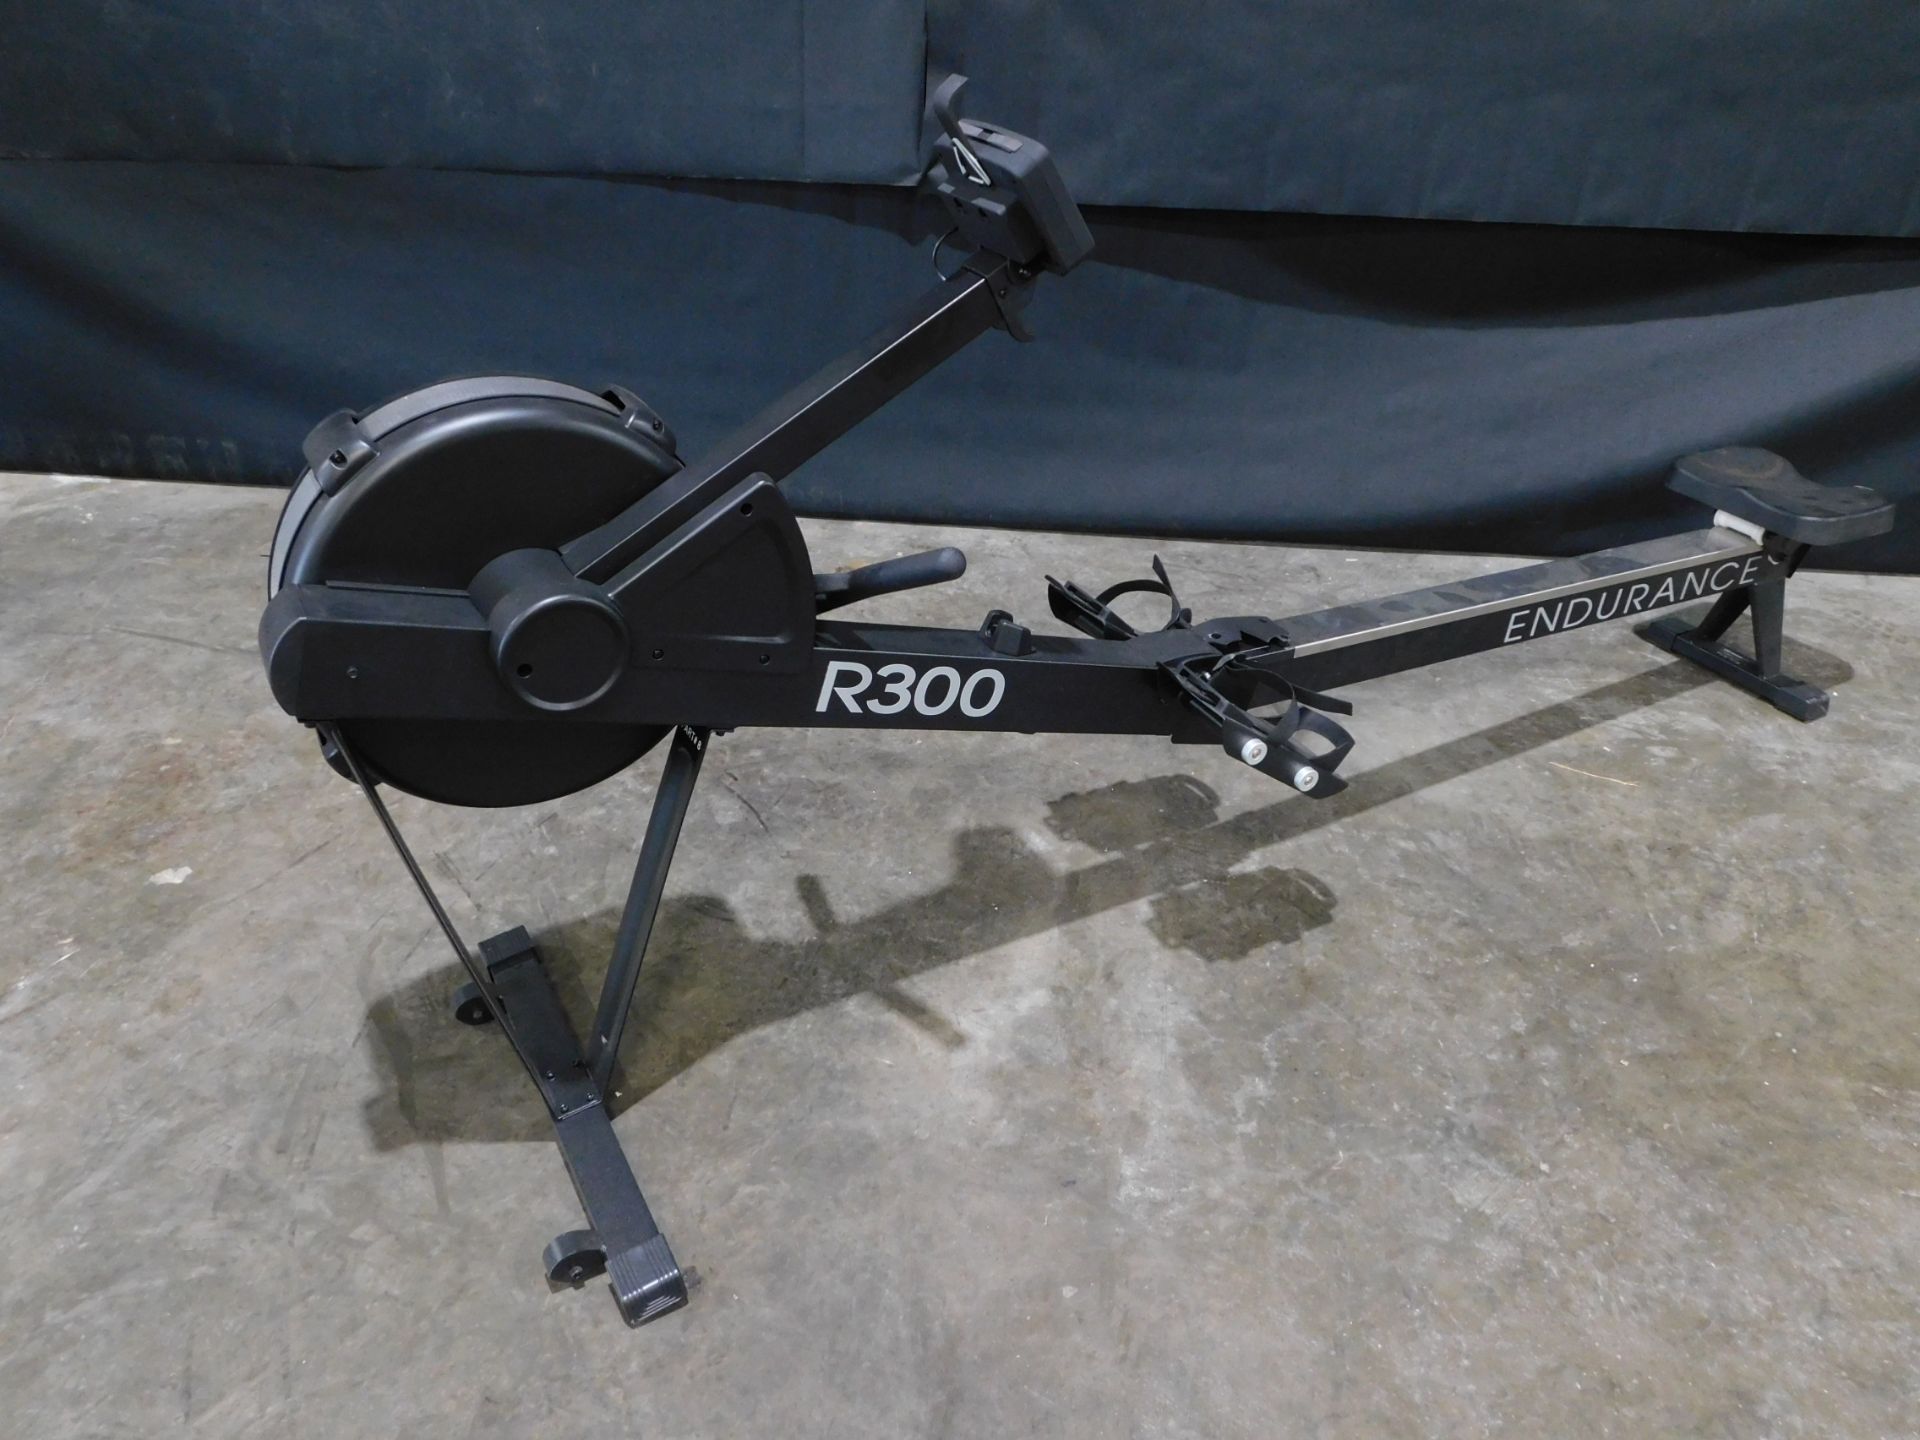 Body Solid Endurance R300 Rowing Machine-Demonstrator Model, NOTE: Broken Plastic Piece on Seat